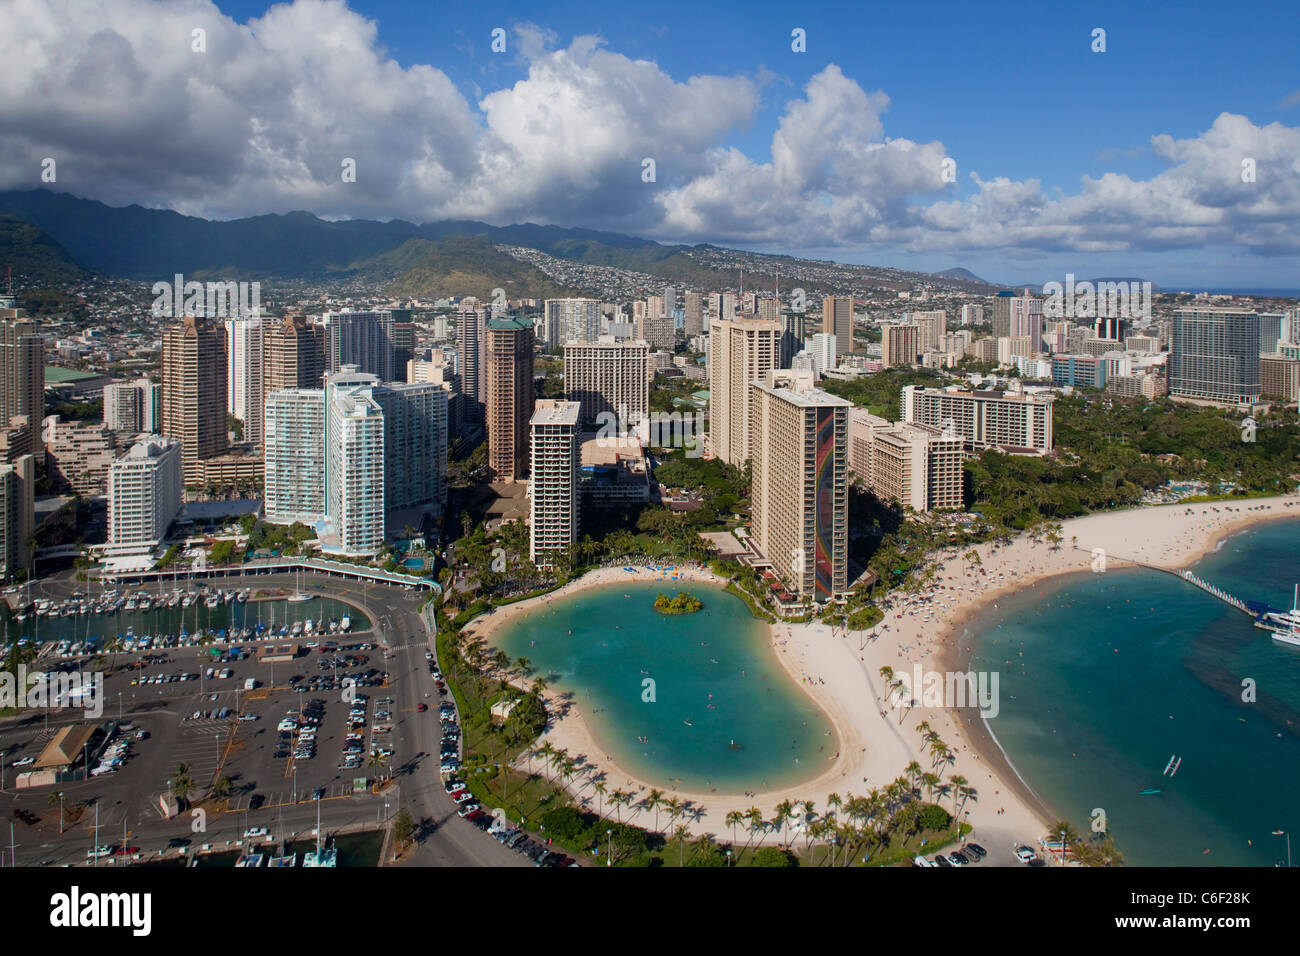 Hilton Hawaiian Village, Waikiki, Honolulu, Oahu, Hawaii Stock Photo - Alamy